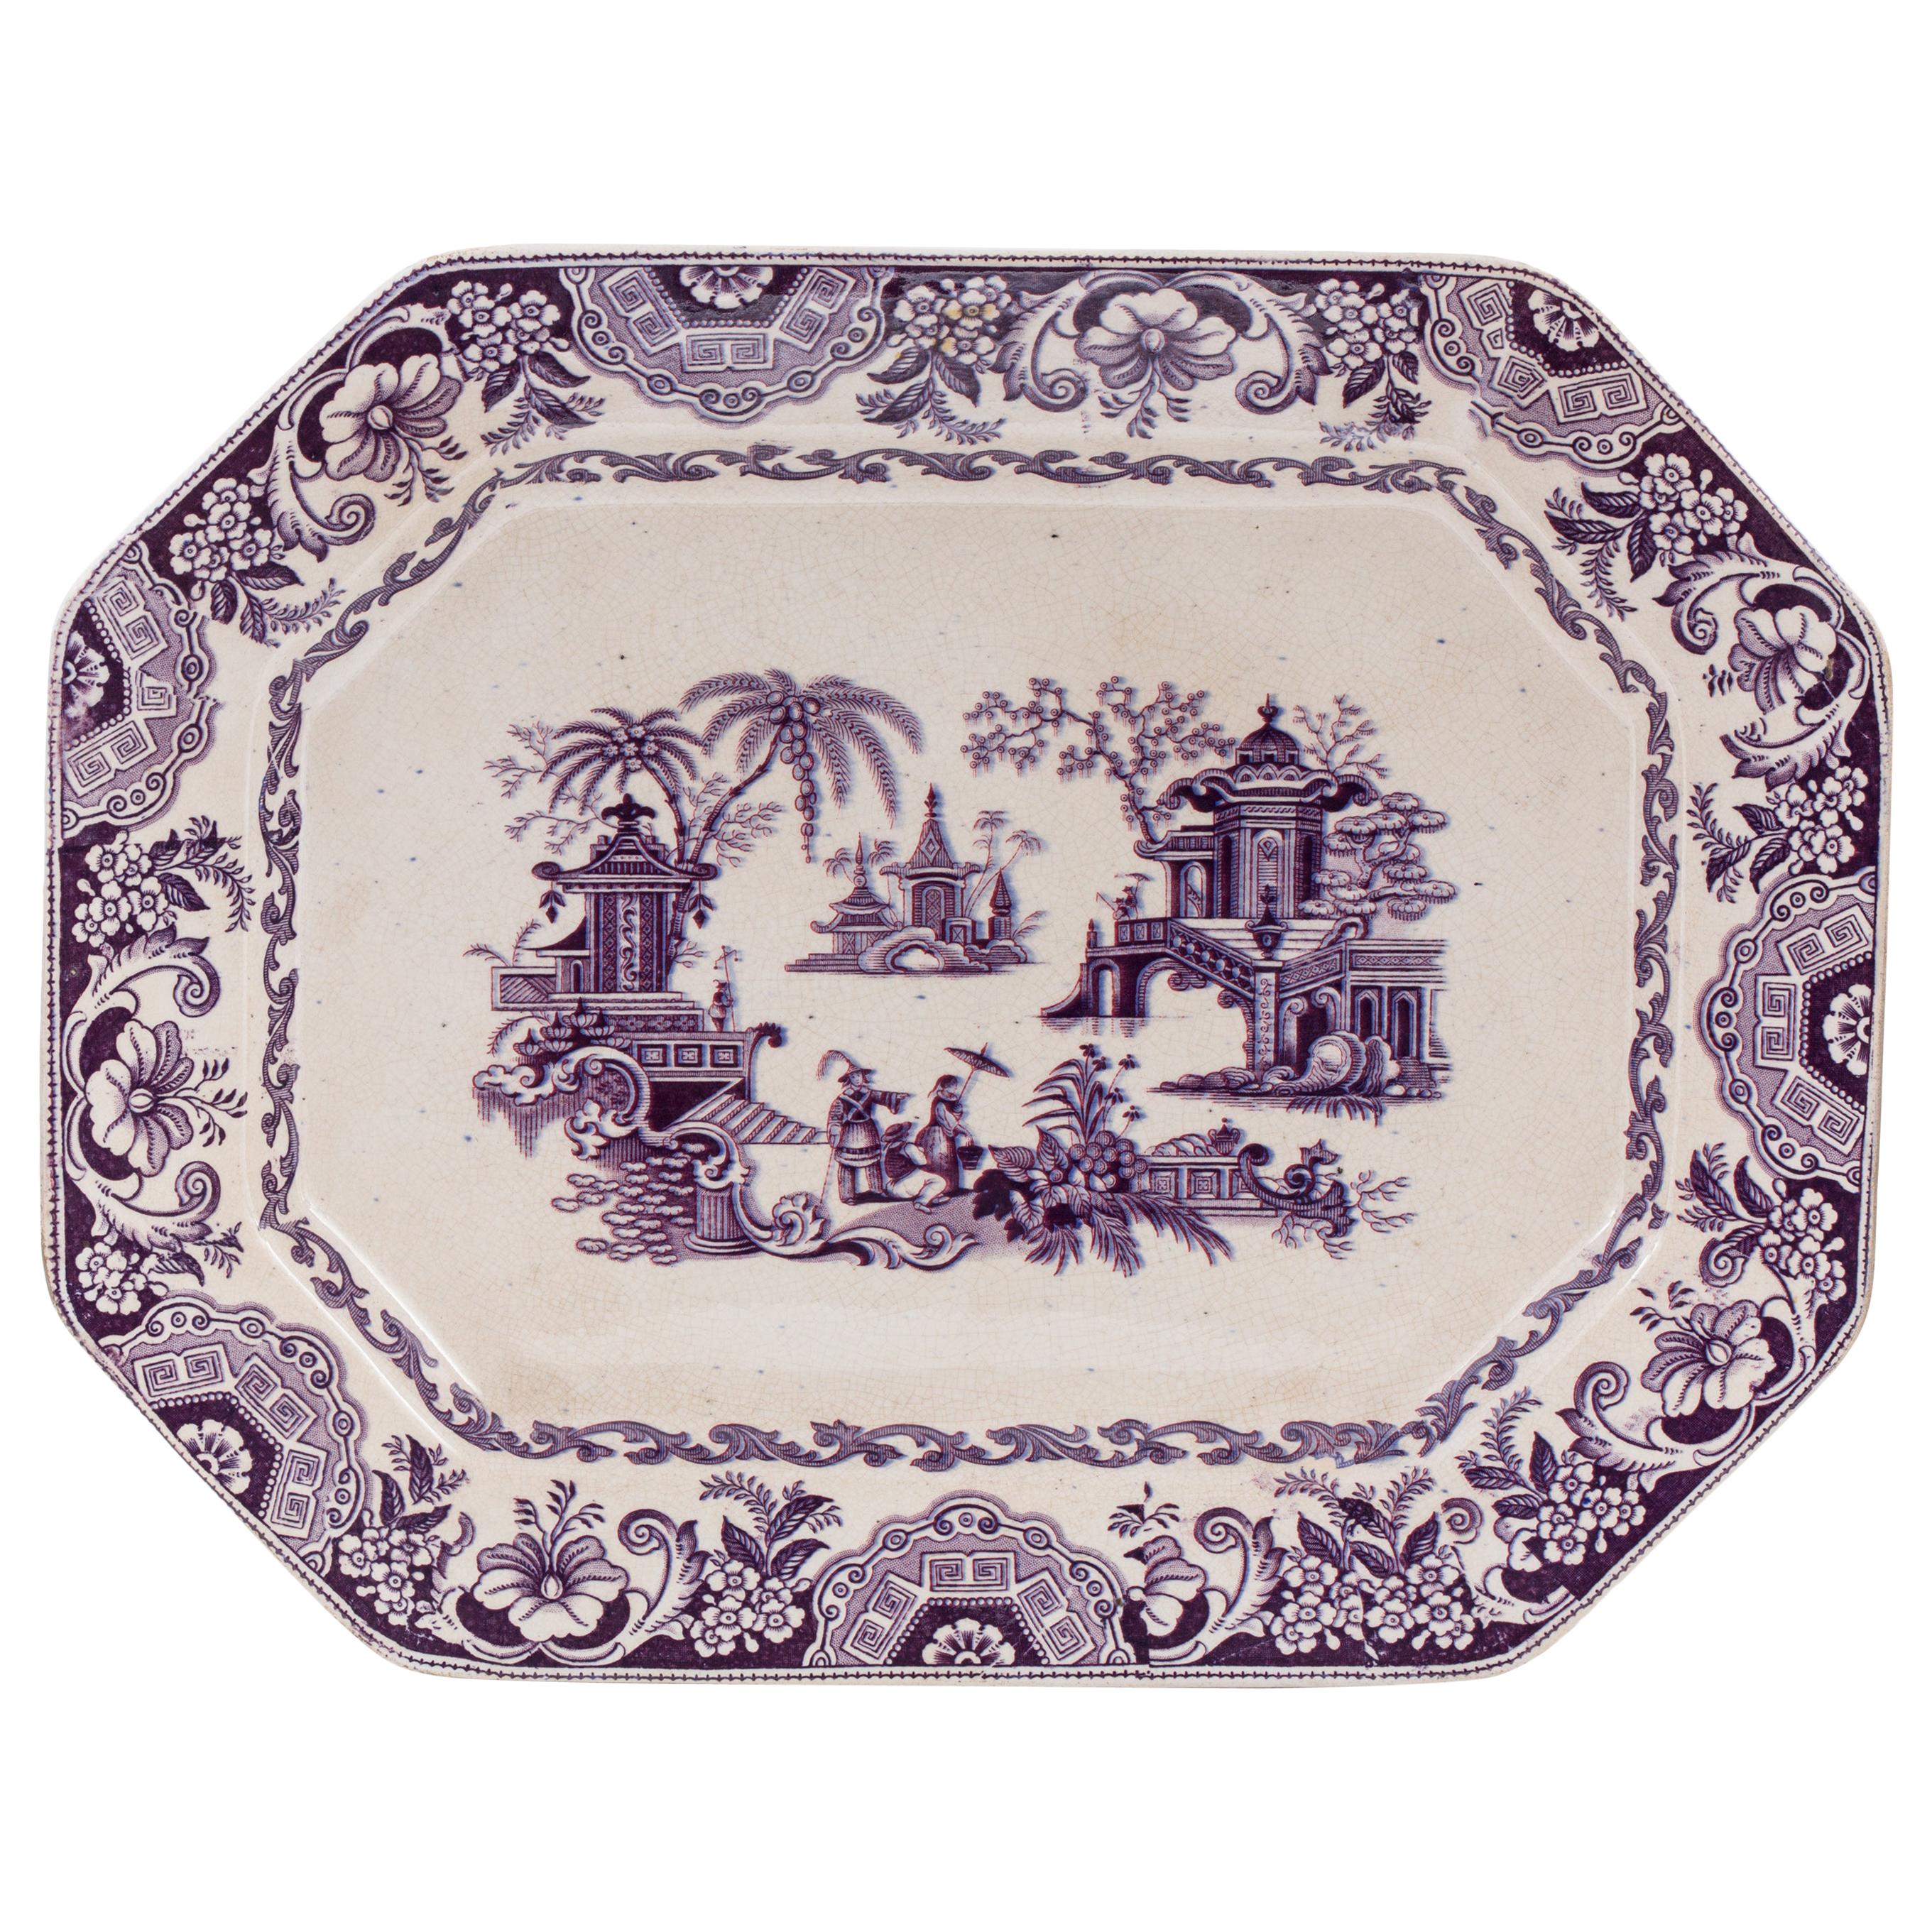 19th Century Sargadelos Ceramic Transferware Octagonal Serving Plate